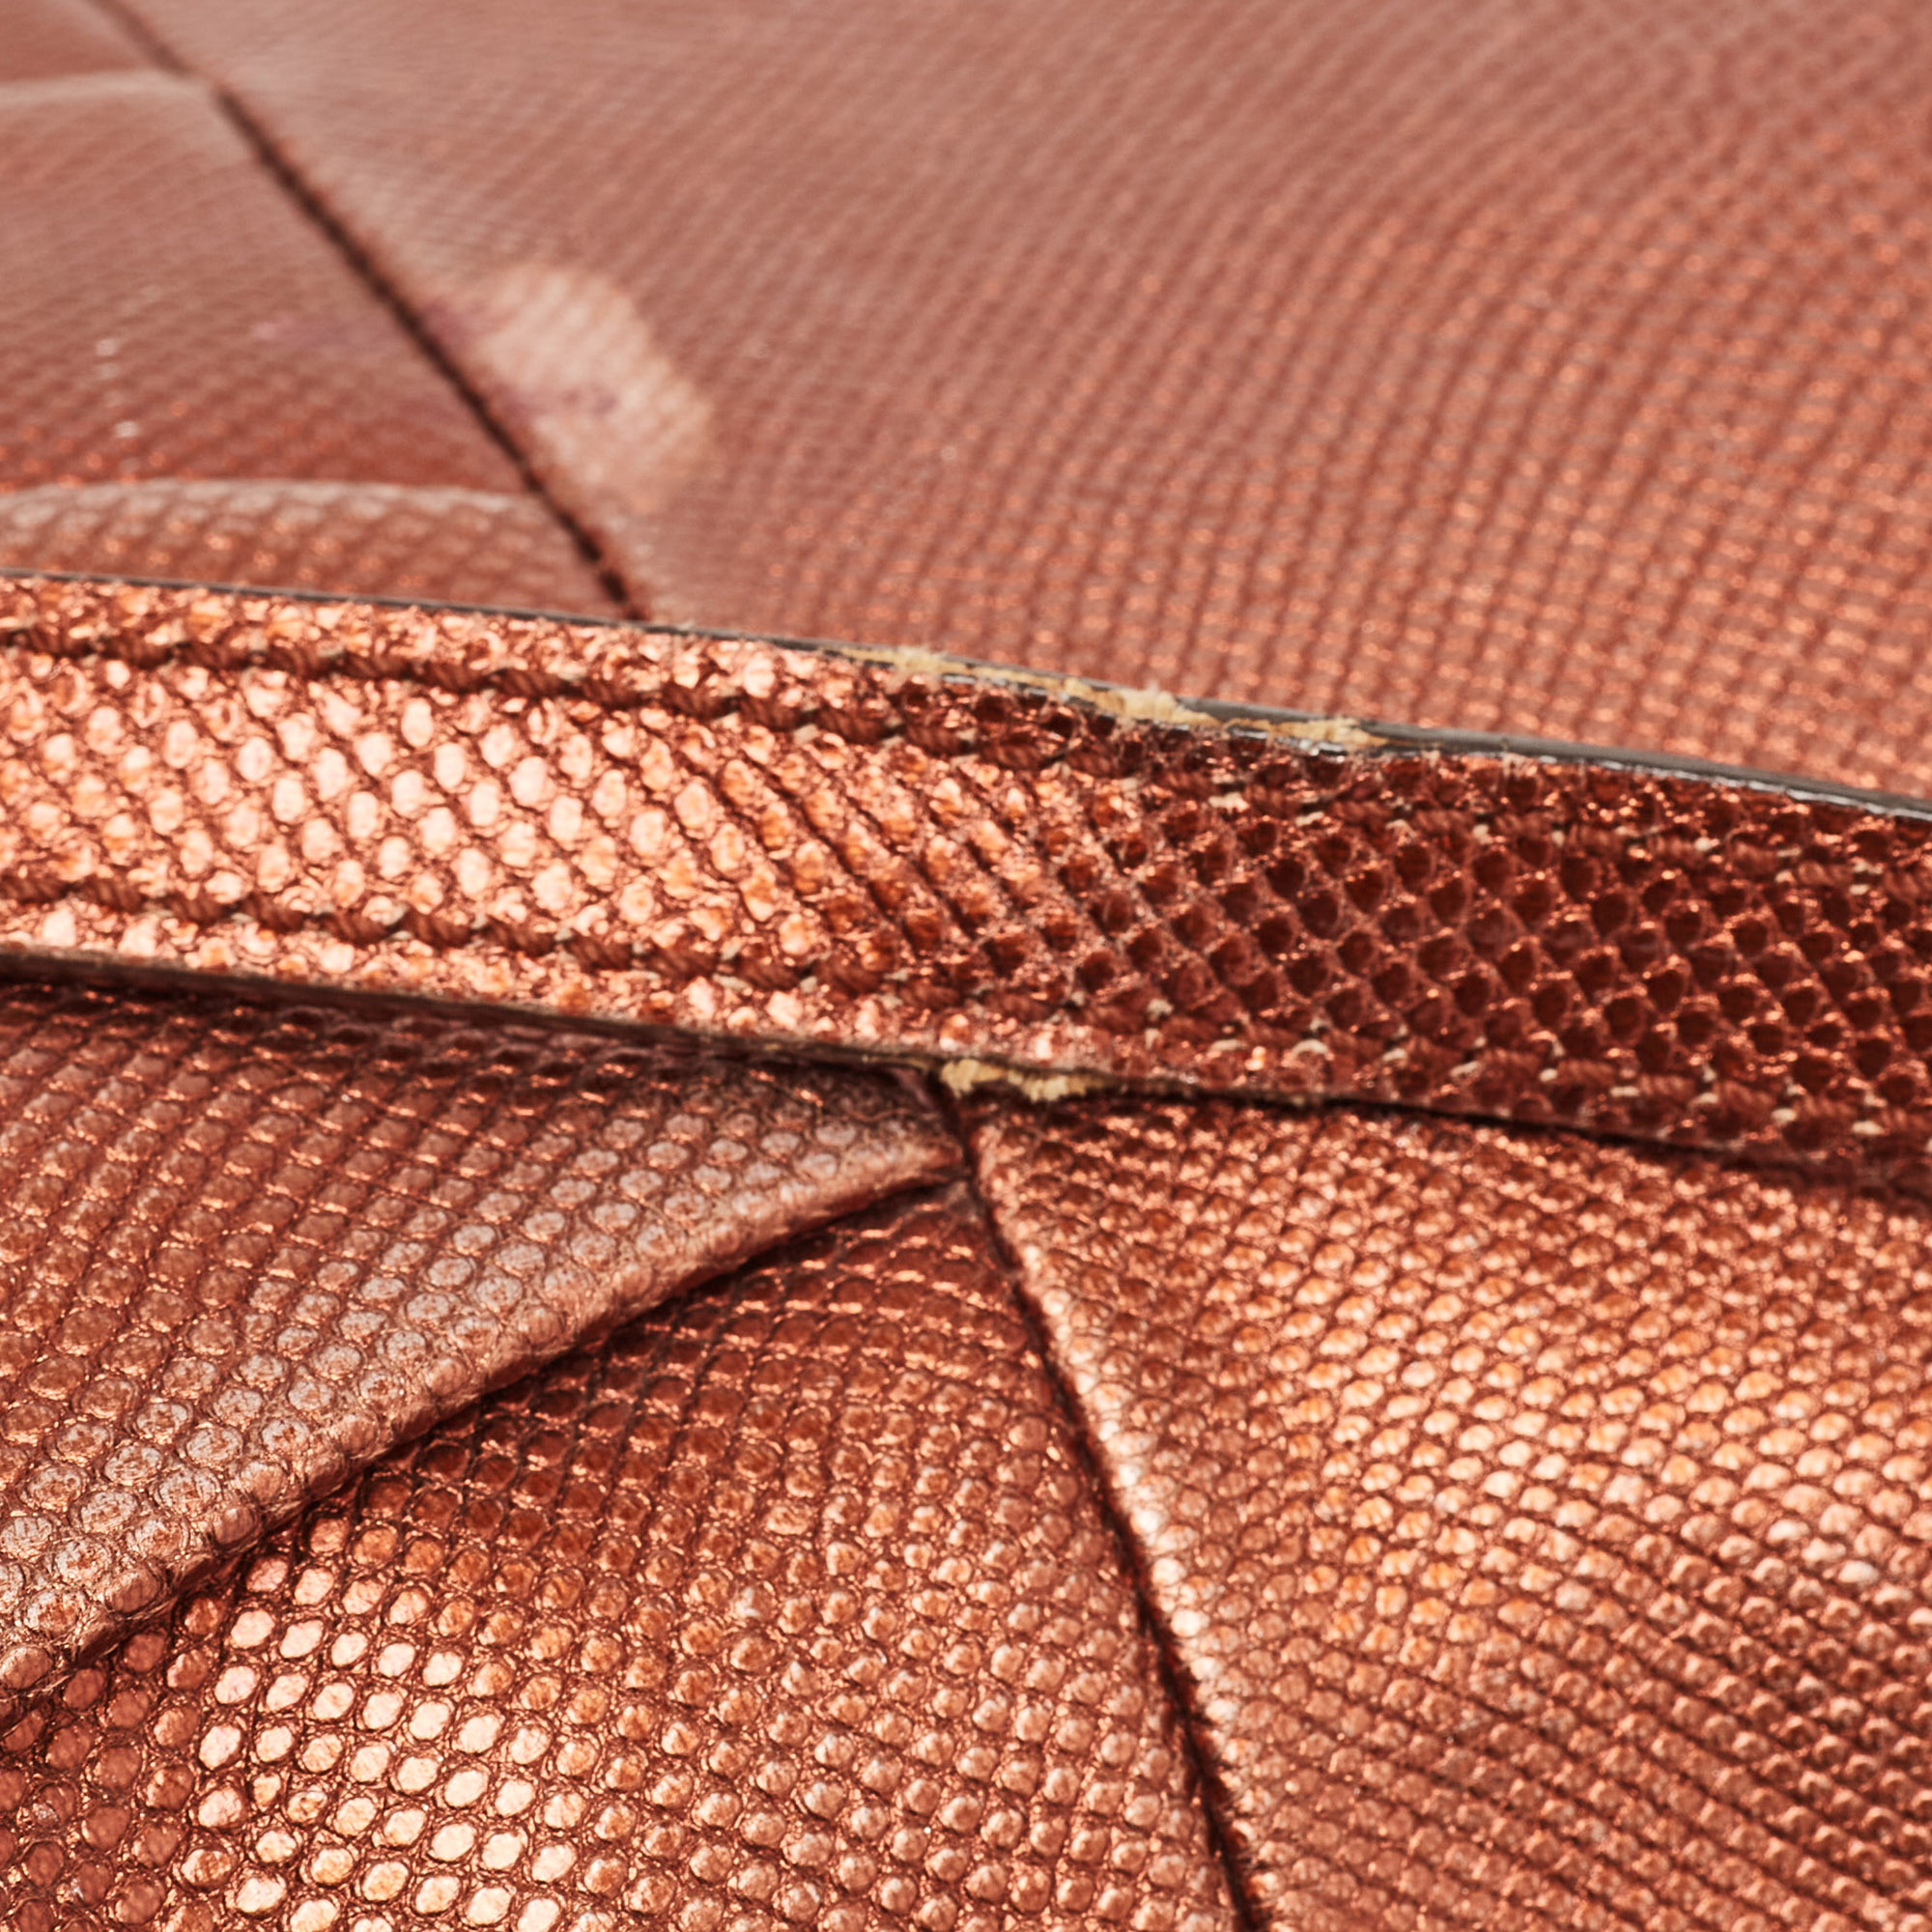 Salvatore Ferragamo Bronze Karung Leather Frame Clutch Bag